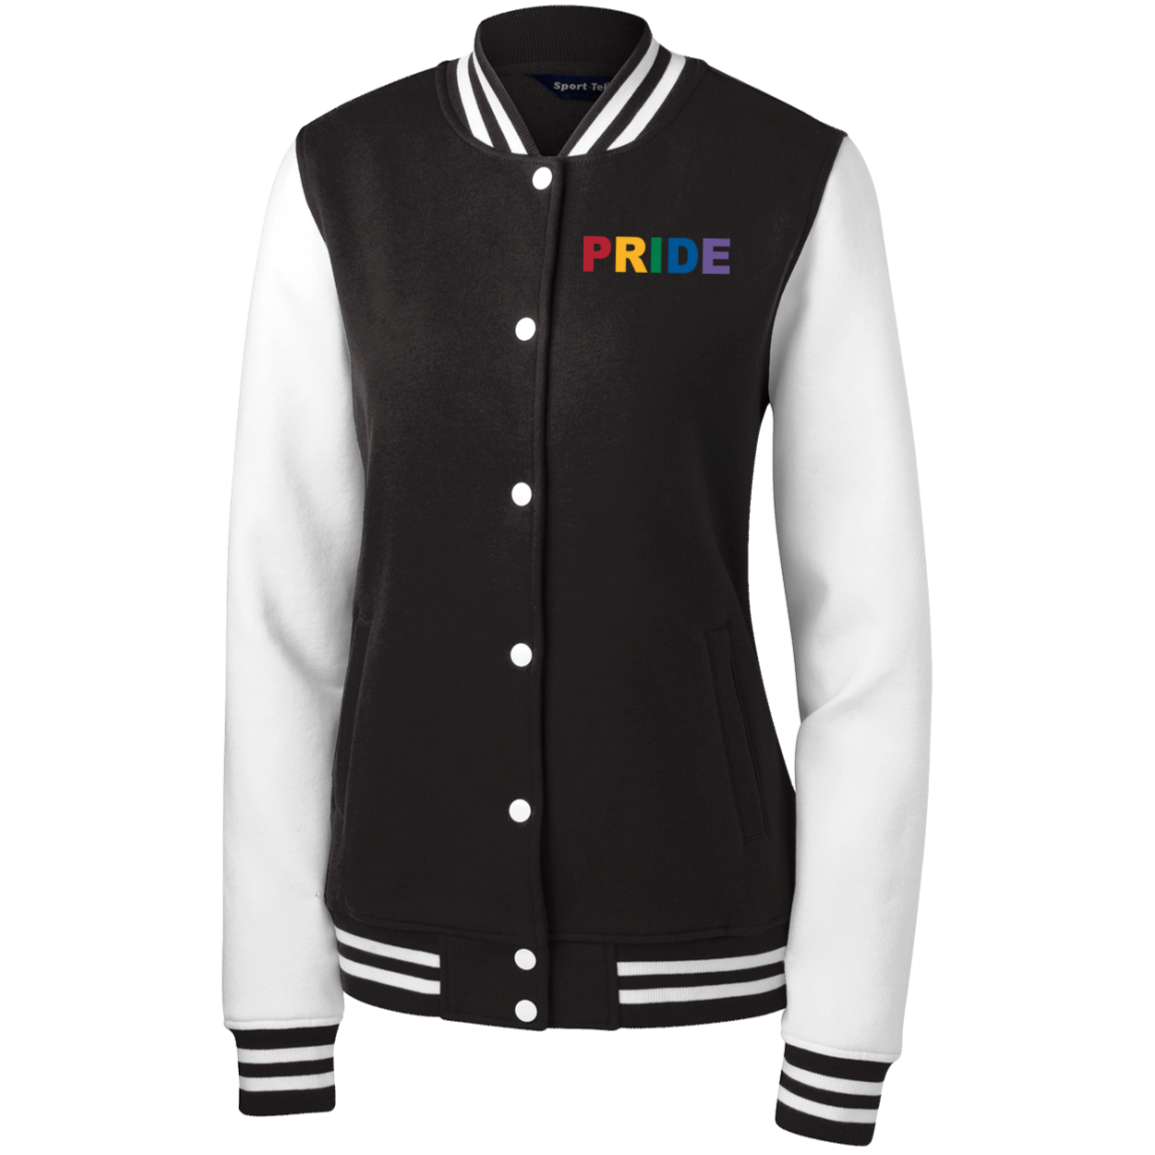 PRIDE Letterman Style Jacket